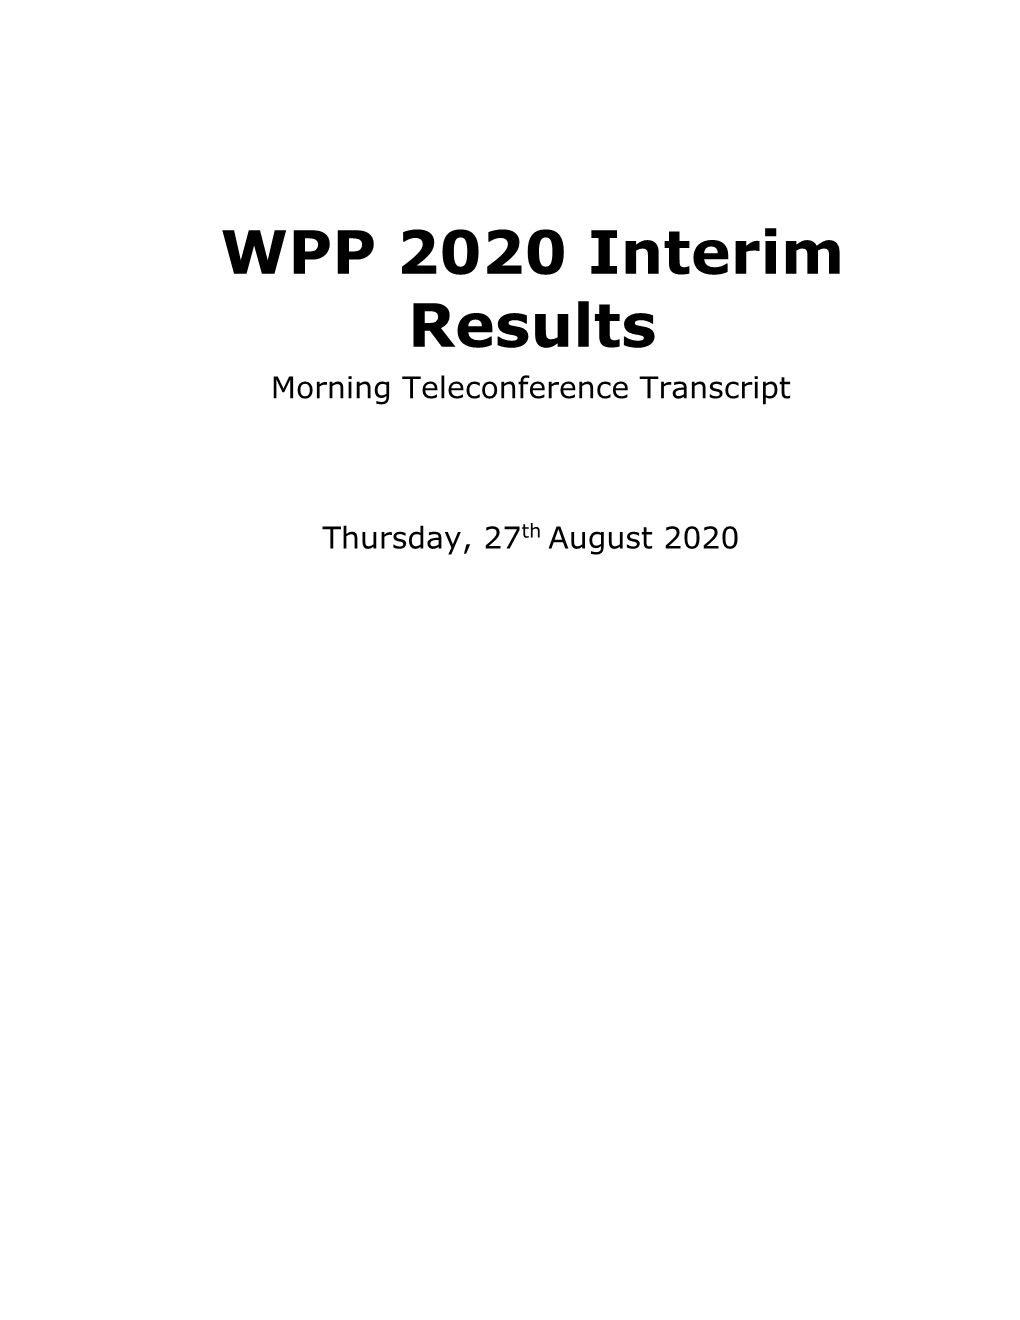 WPP 2020 Interim Results Morning Teleconference Transcript